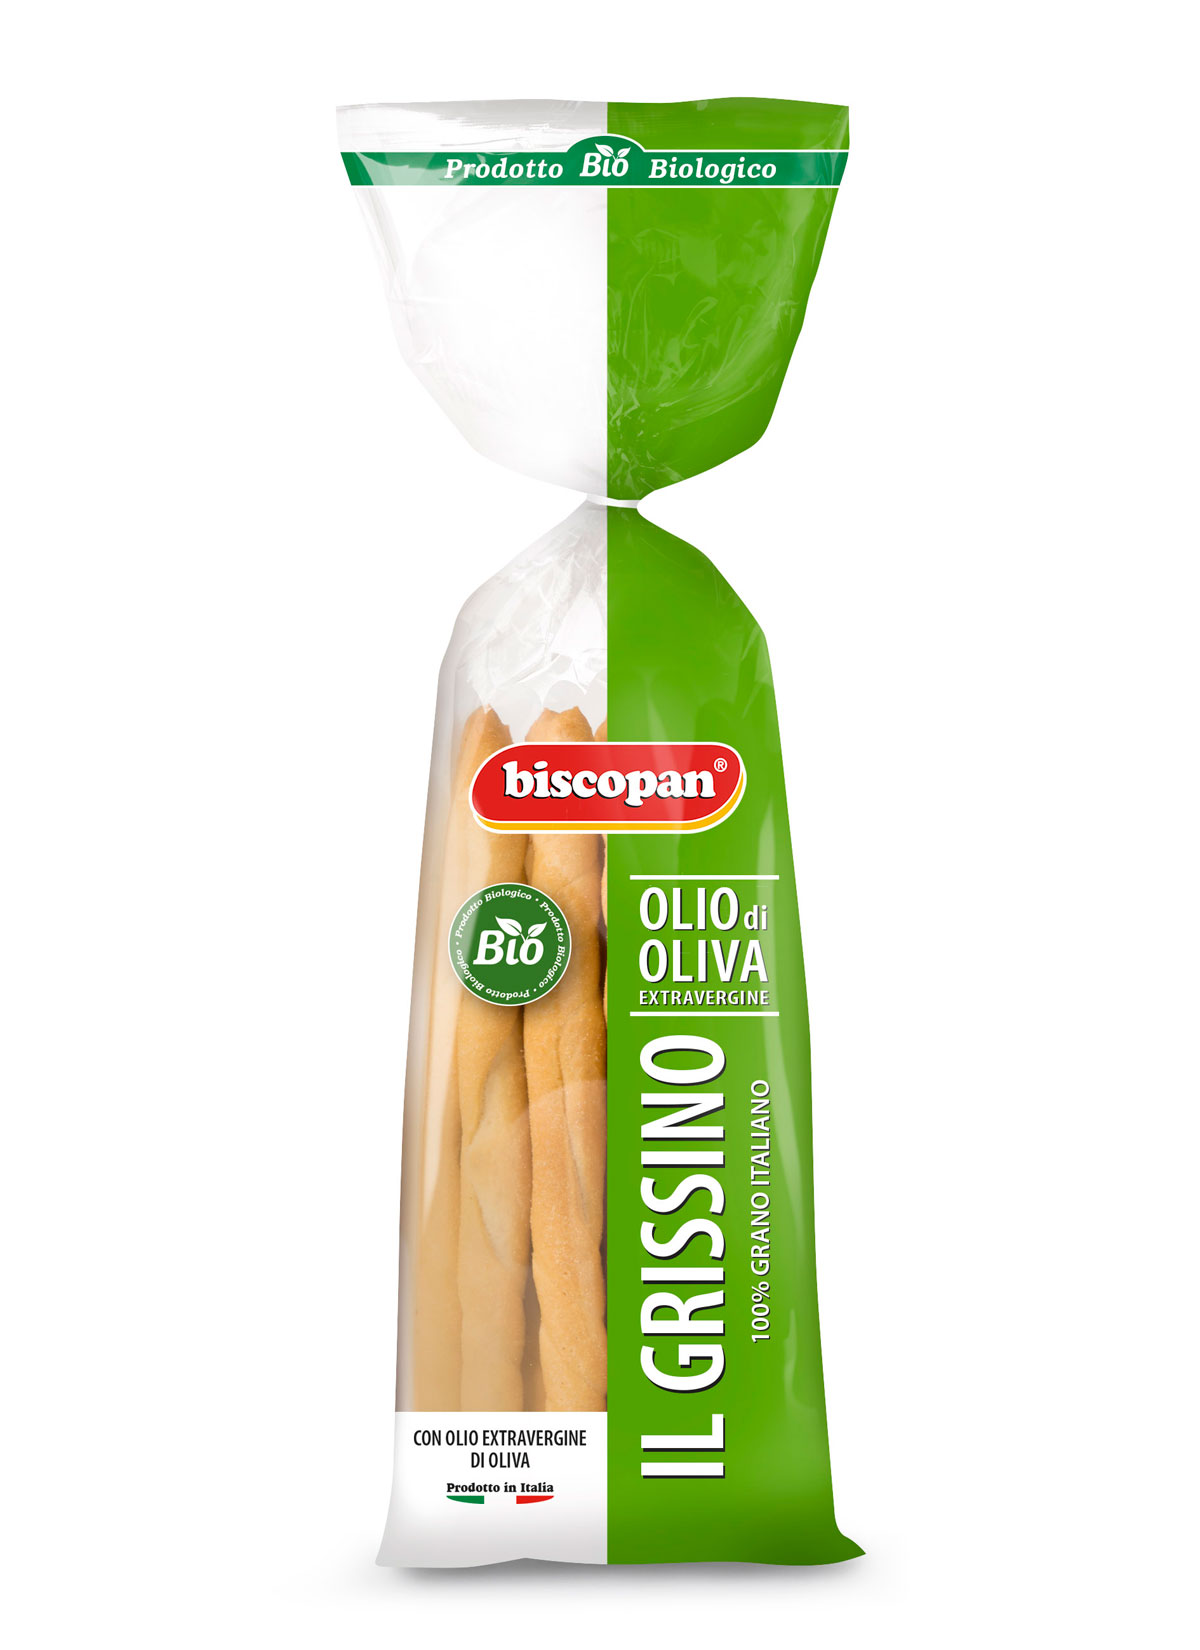 Olive oil breadsticks